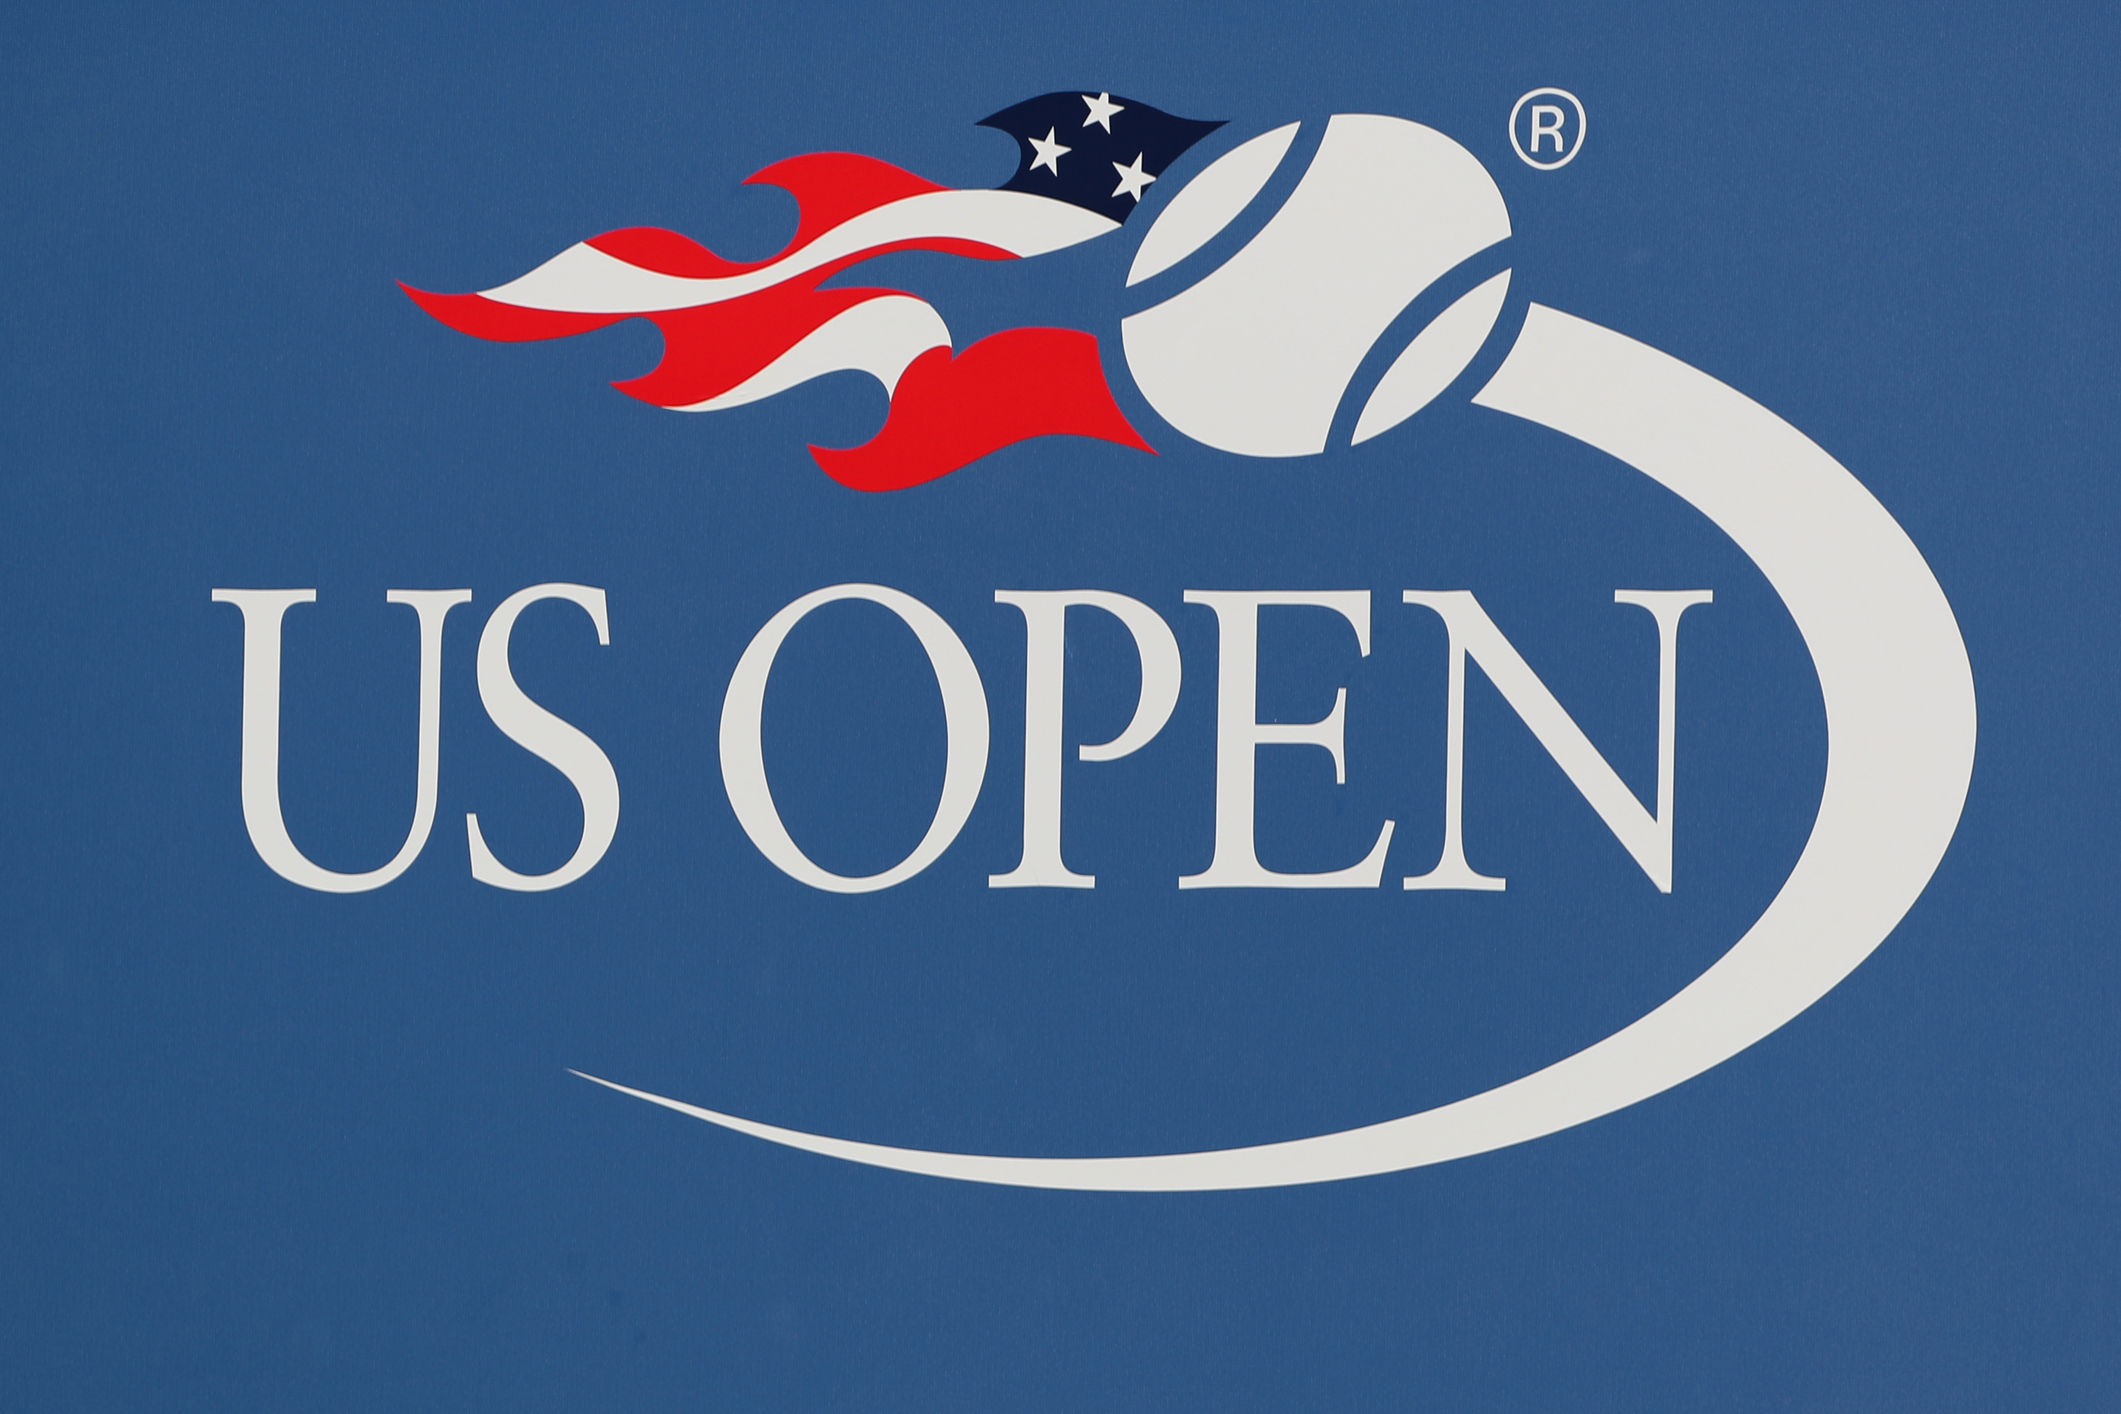 US-Open